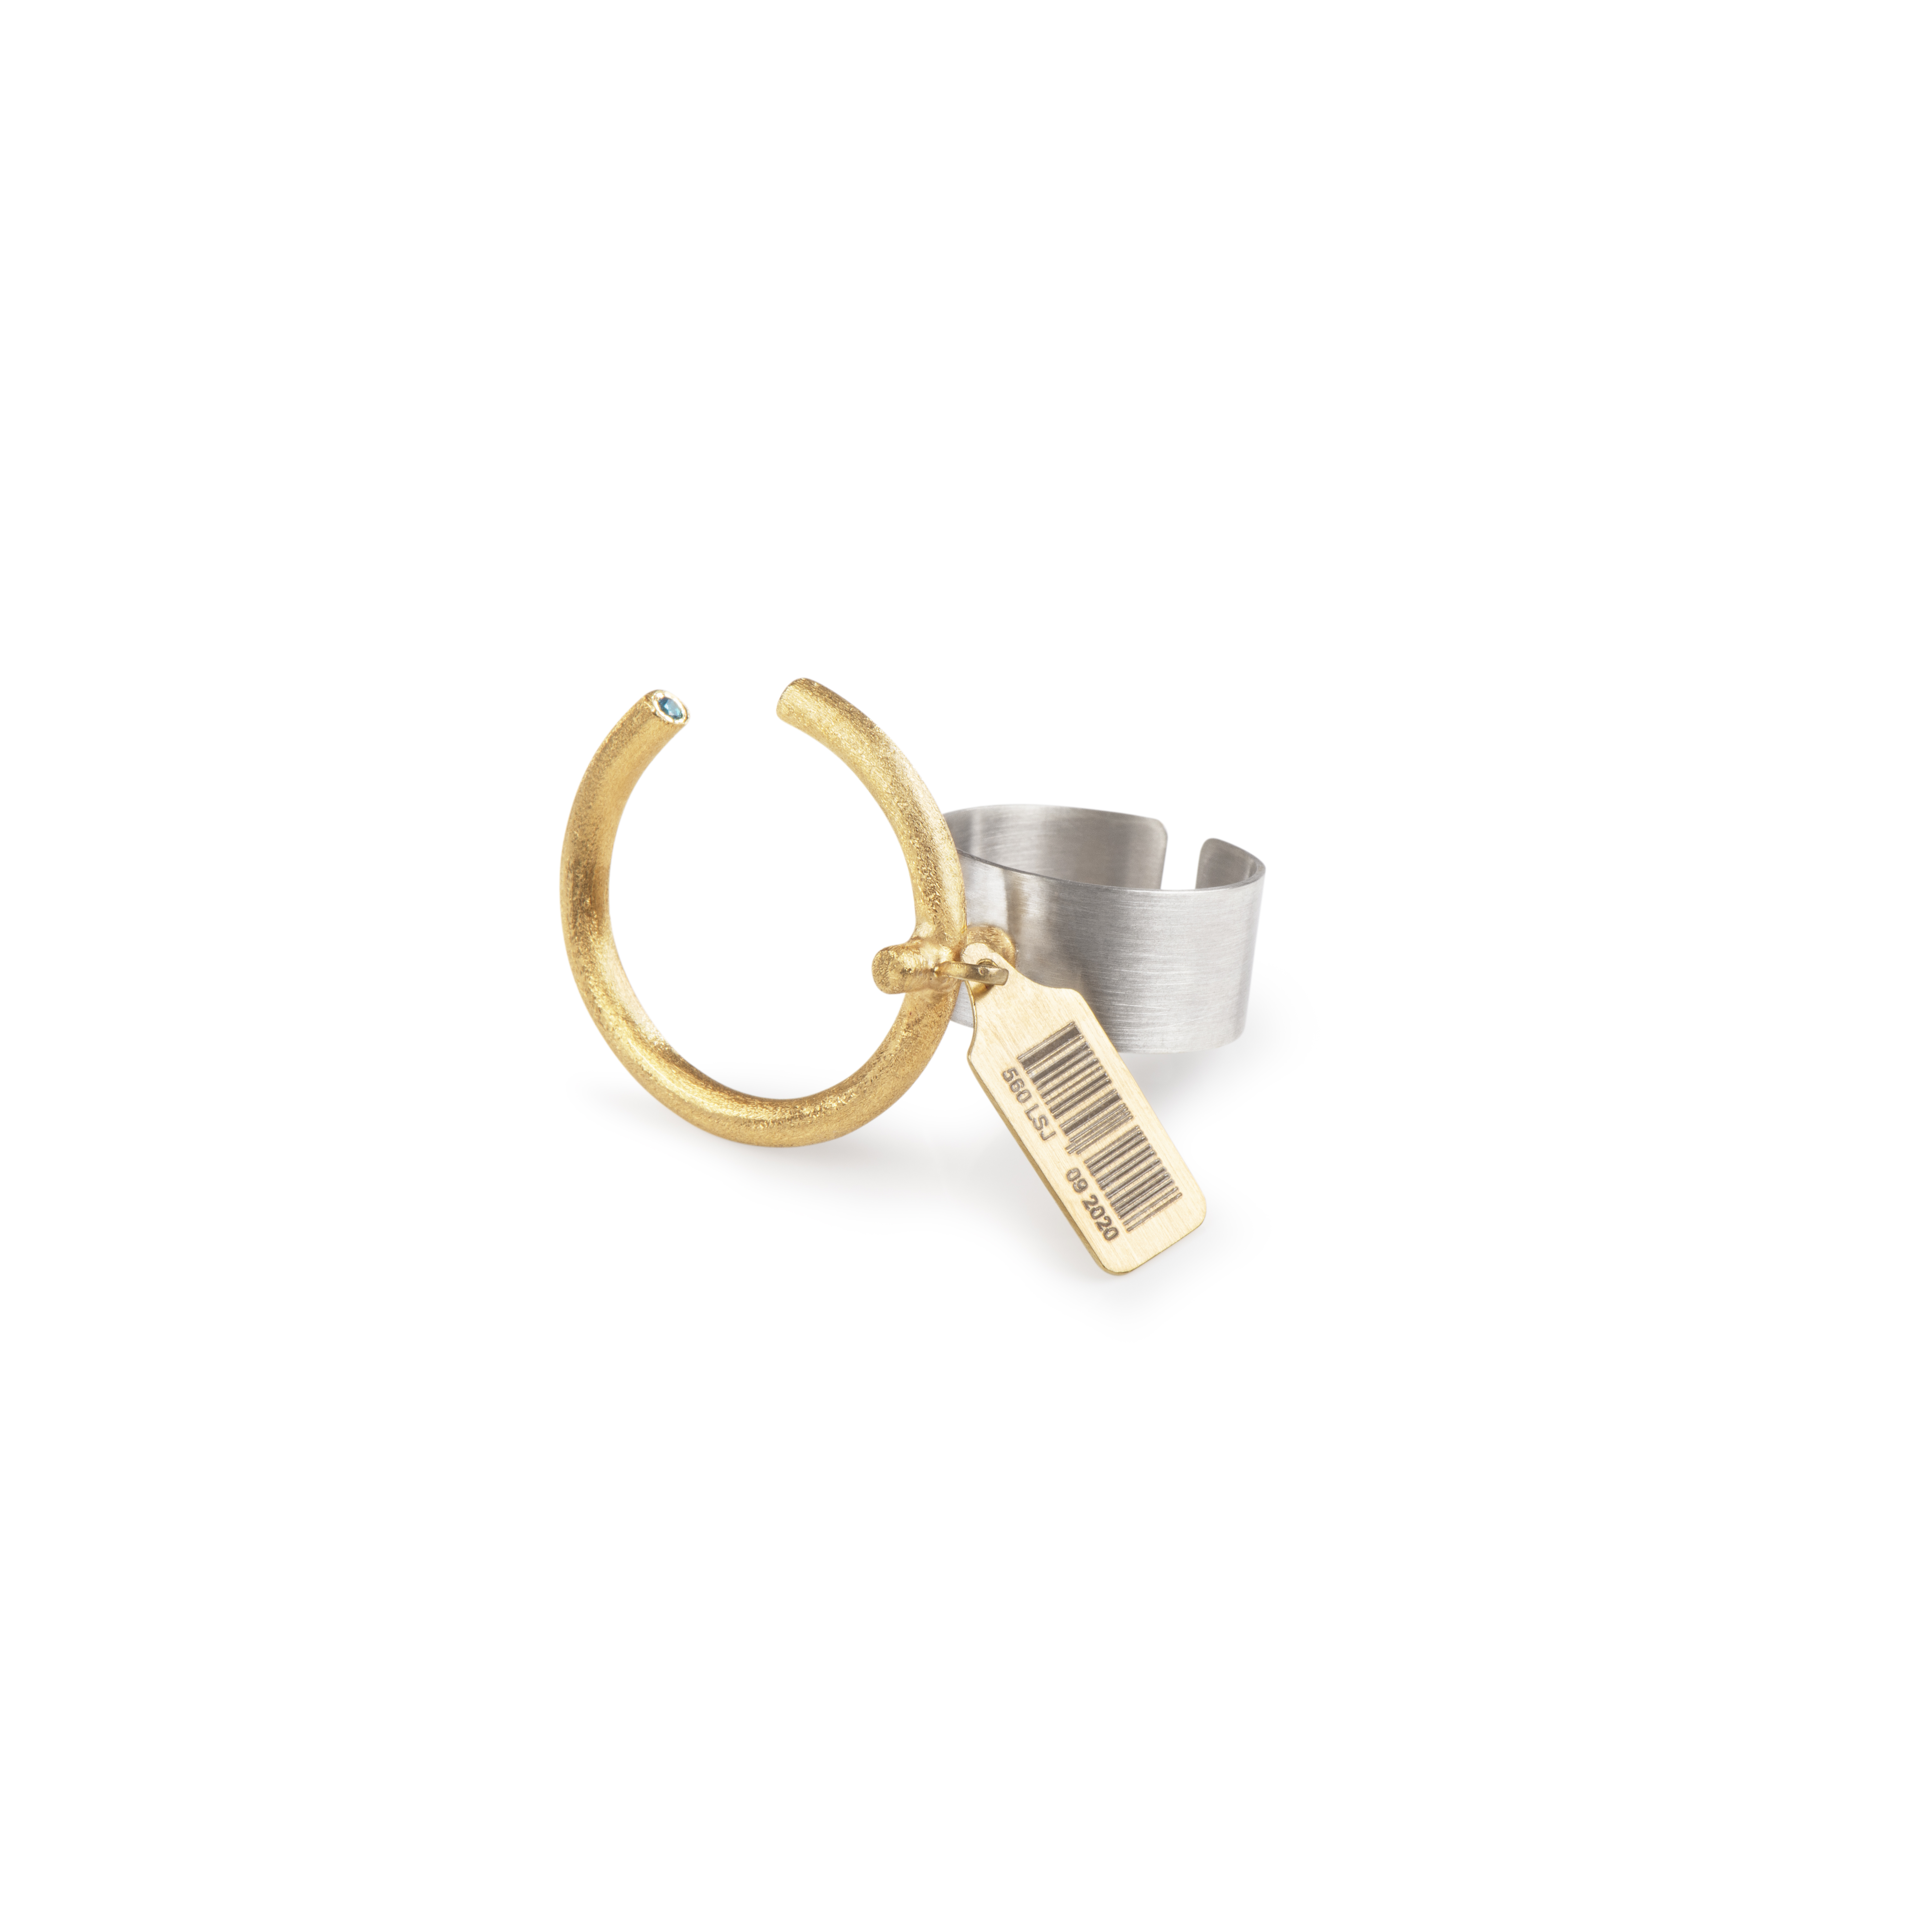  Circular Clothes Hanger Anel - Prata com plaqué de Ouro - Image 3